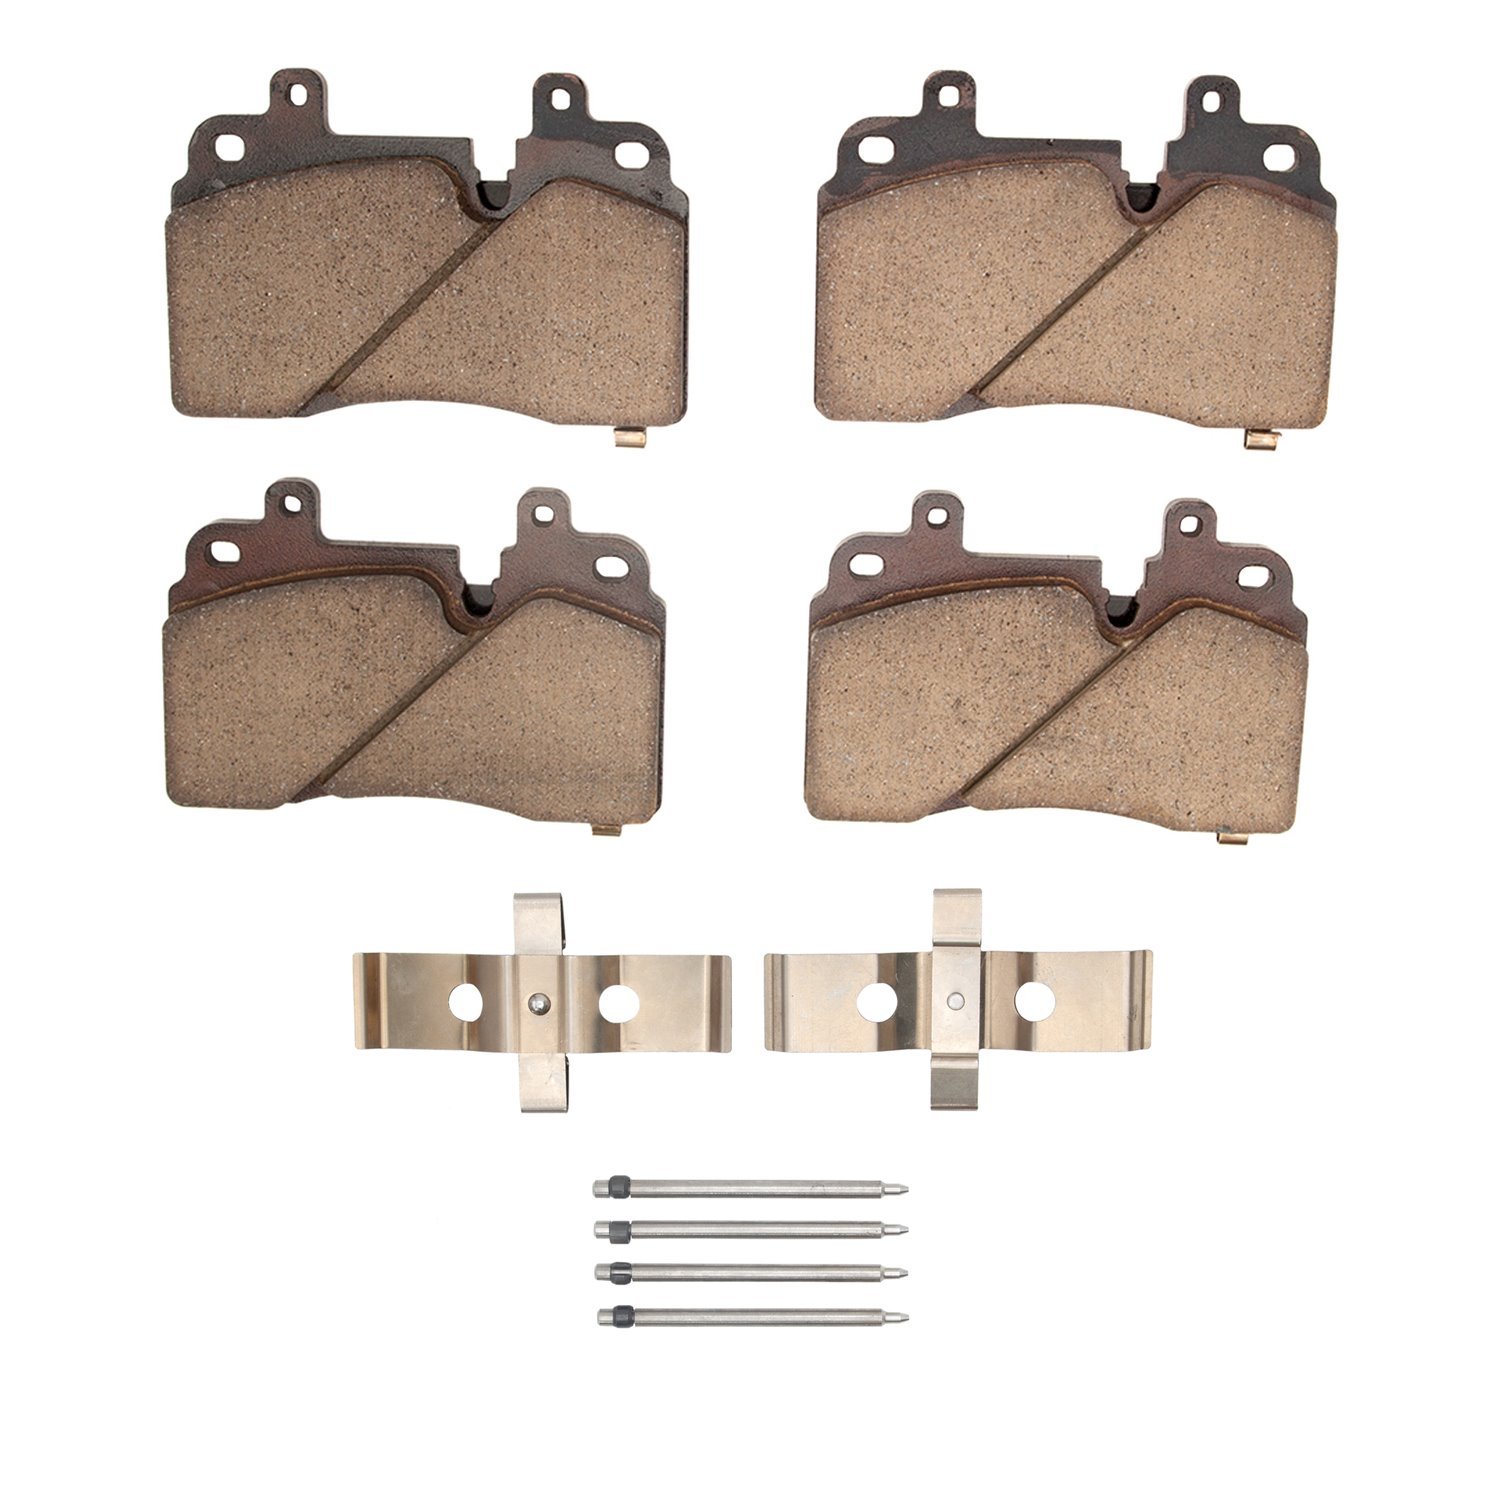 1310-2251-01 3000-Series Ceramic Brake Pads & Hardware Kit, Fits Select GM, Position: Front